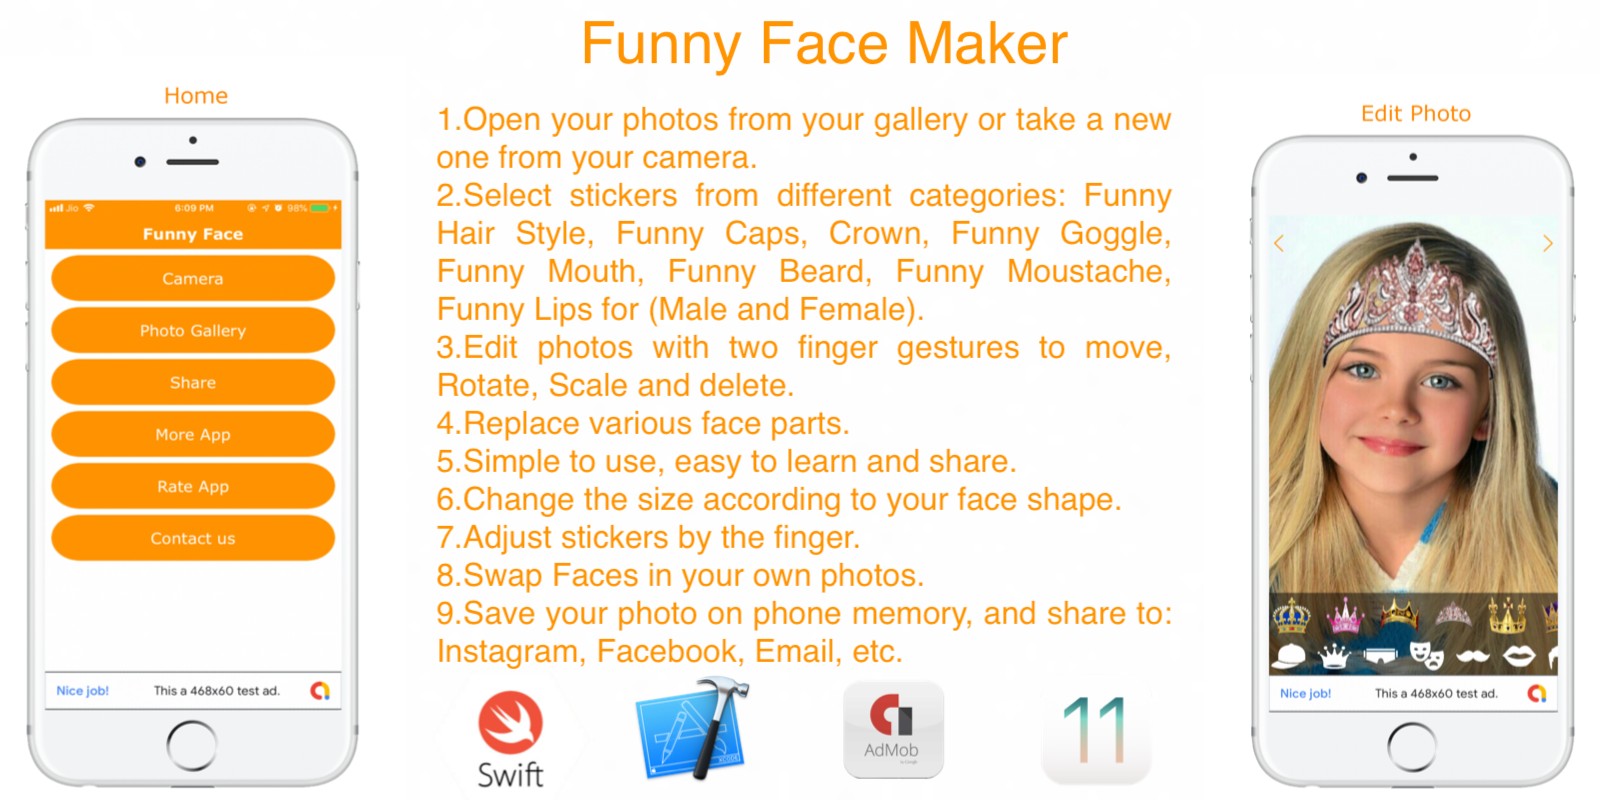 Funny Face Maker